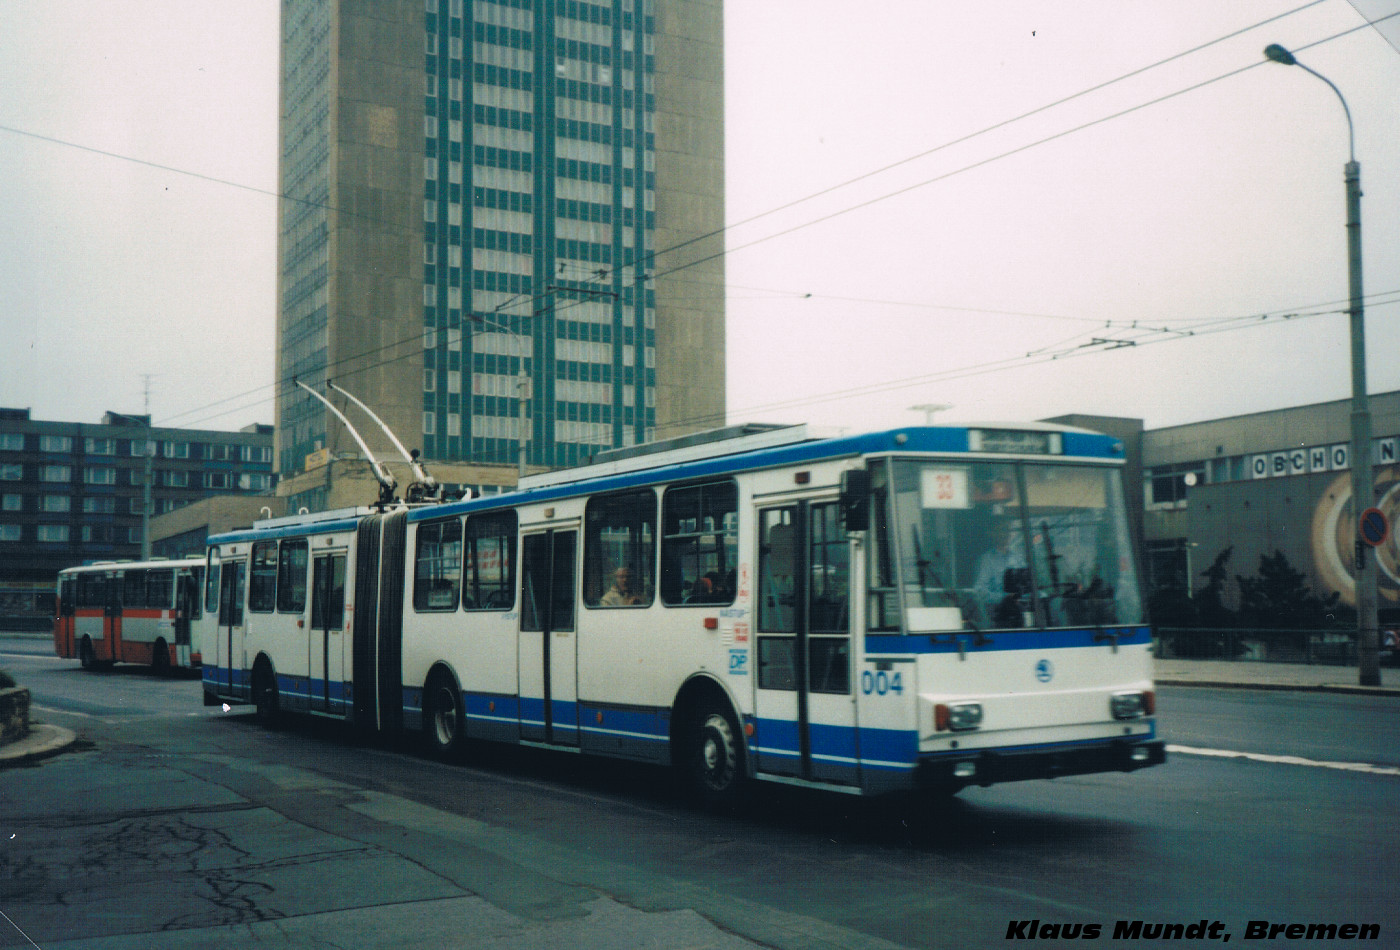 Československé trolejbusy - Trolejbusové provozy - Česká republika -  Chomutov-Jirkov